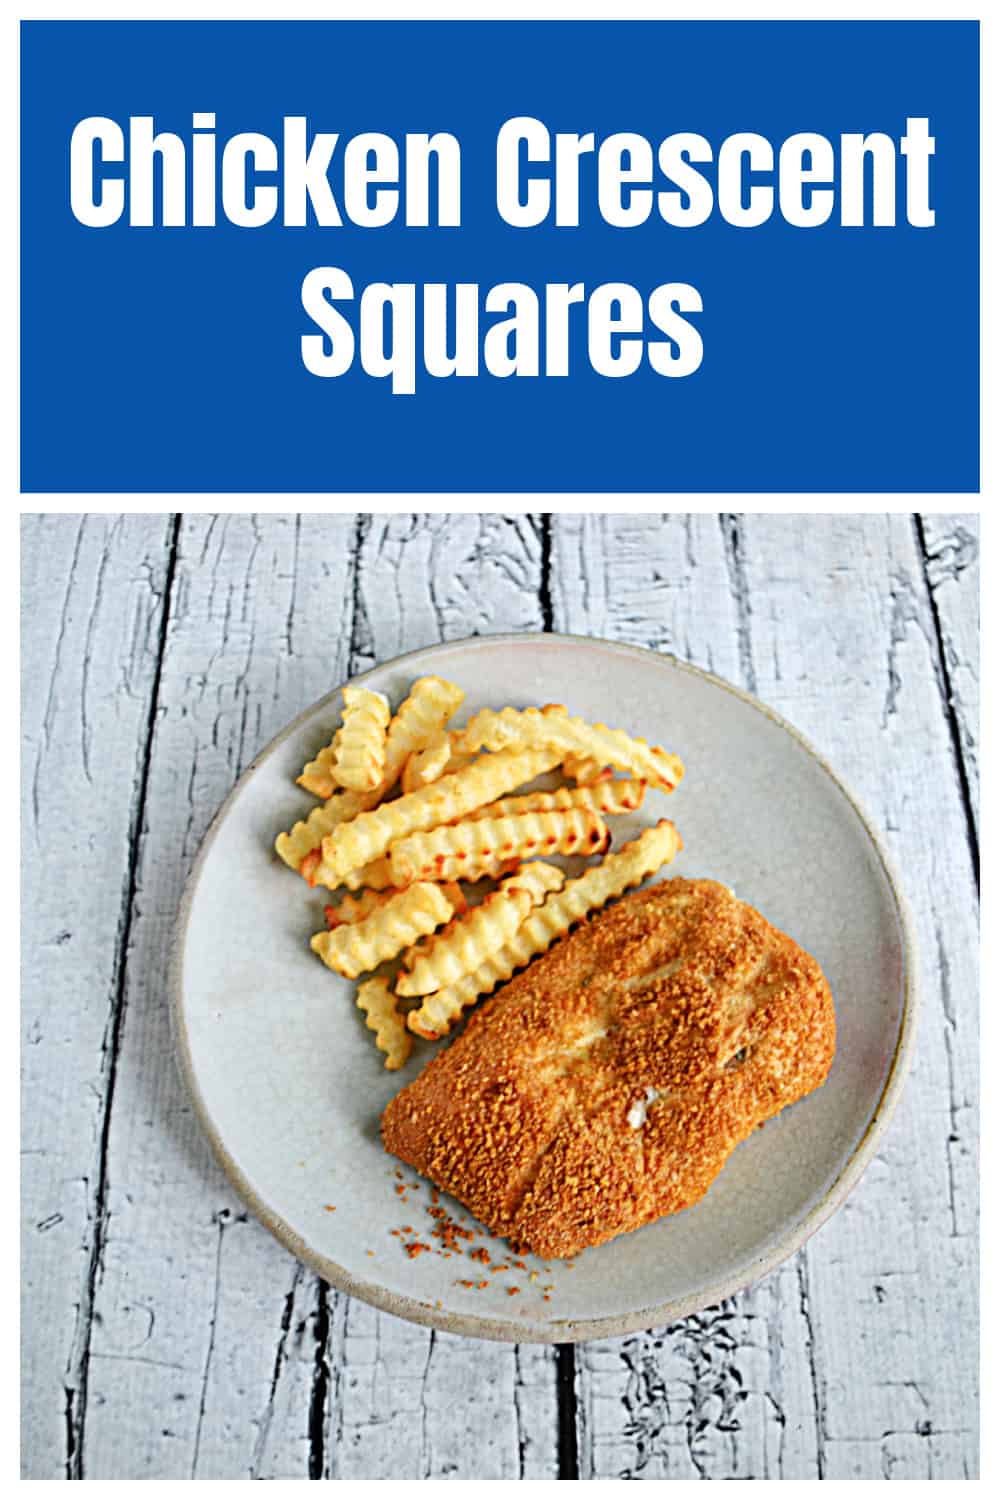 Chicken Crescent Squares